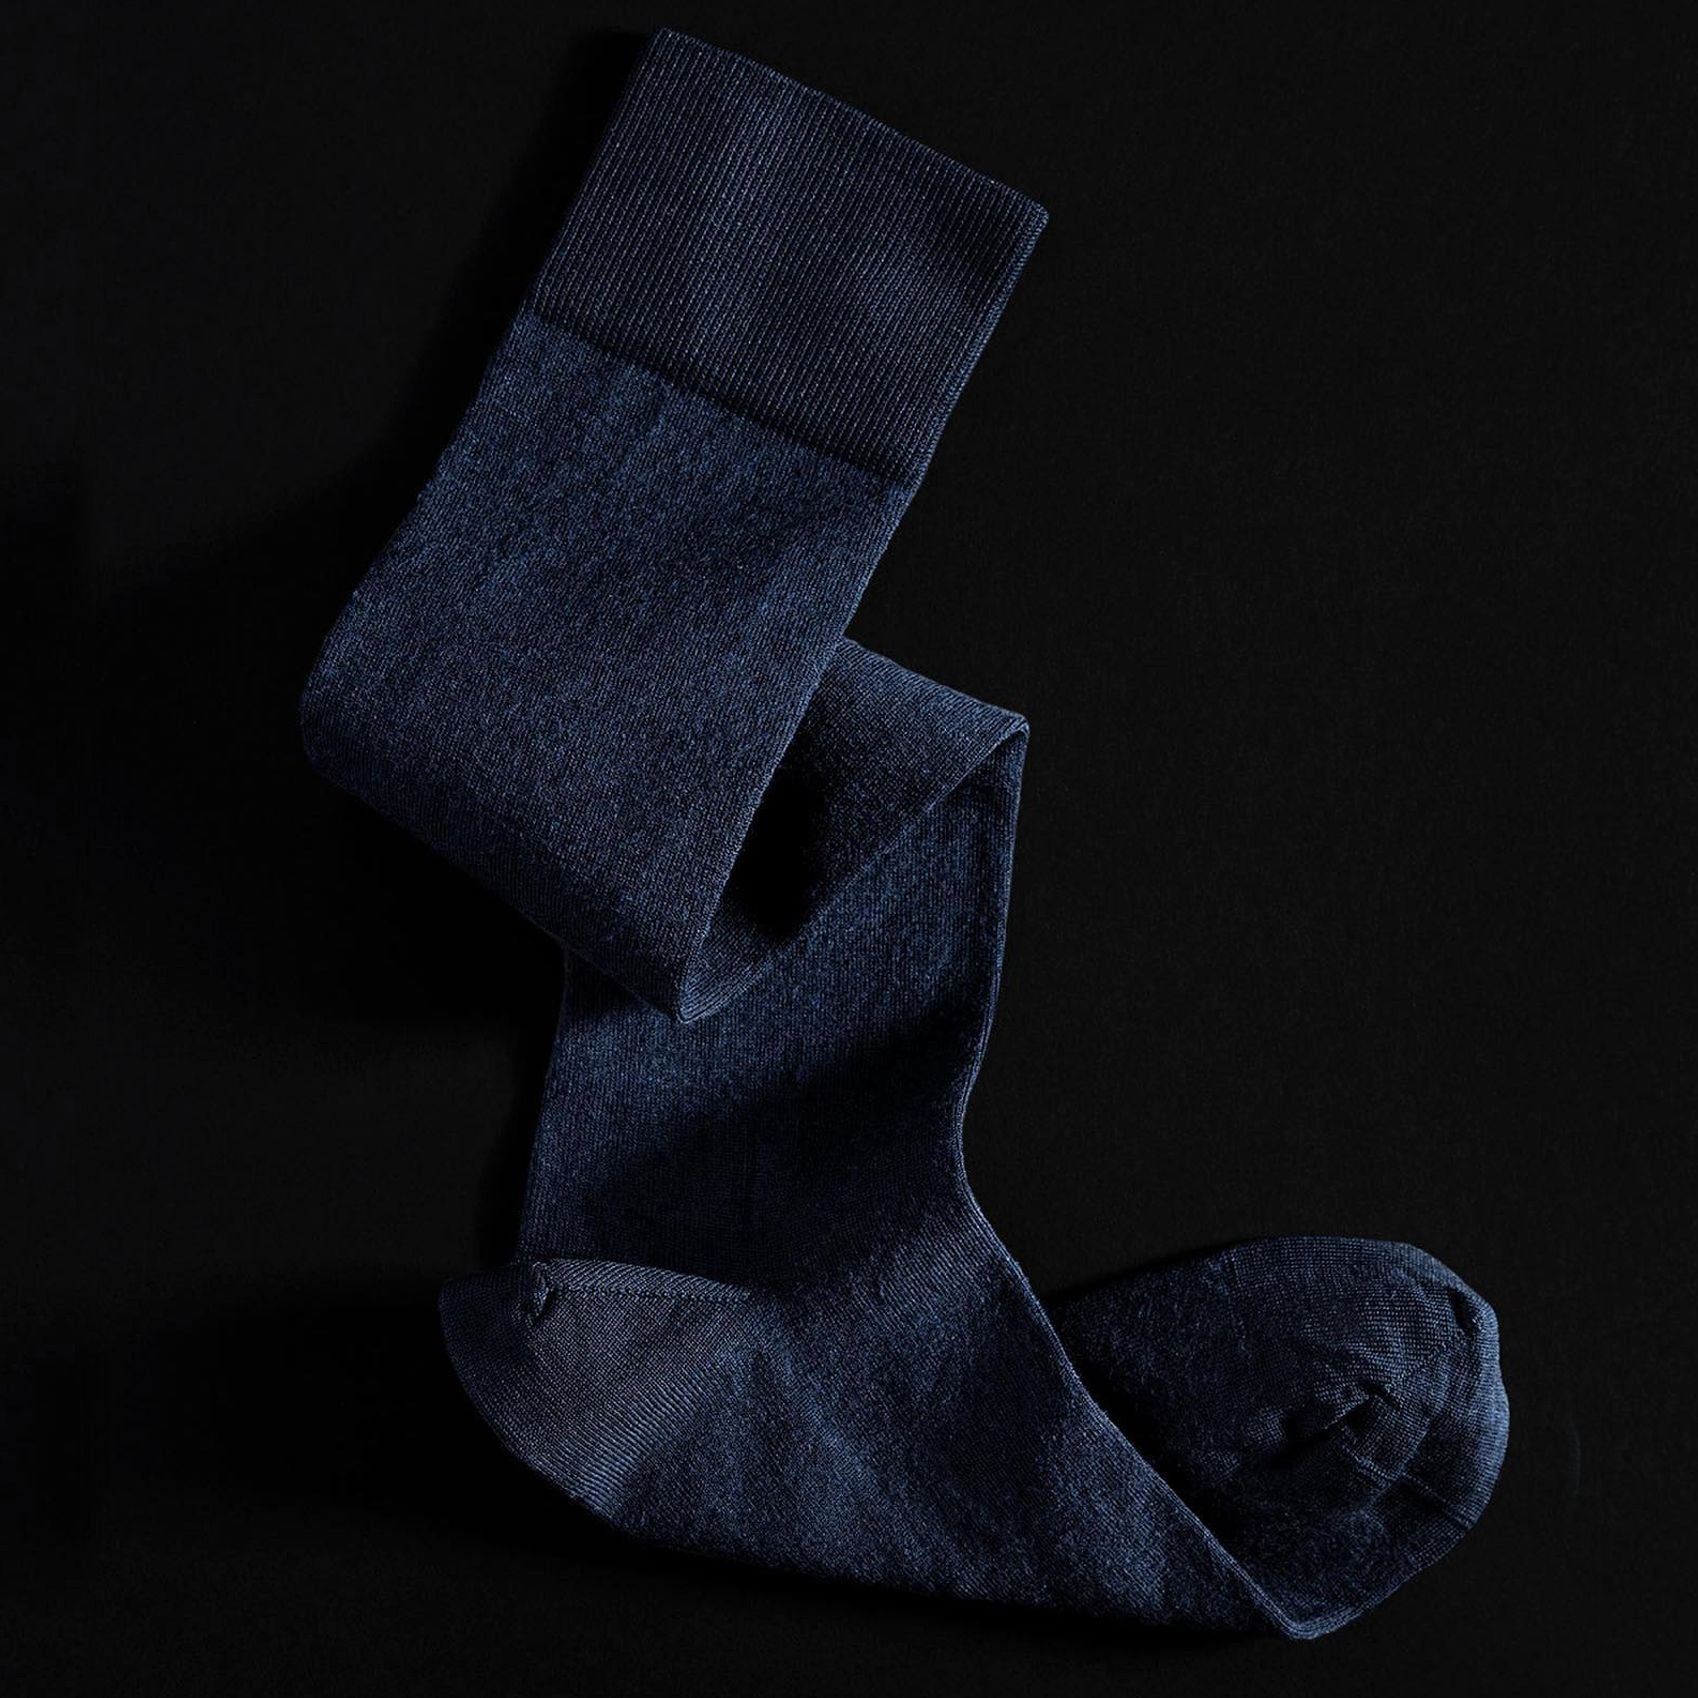 3 PAIR - Icon Knee High Merino Wool and Cotton Italian Socks (Choice of Colors) by Amanda Christensen